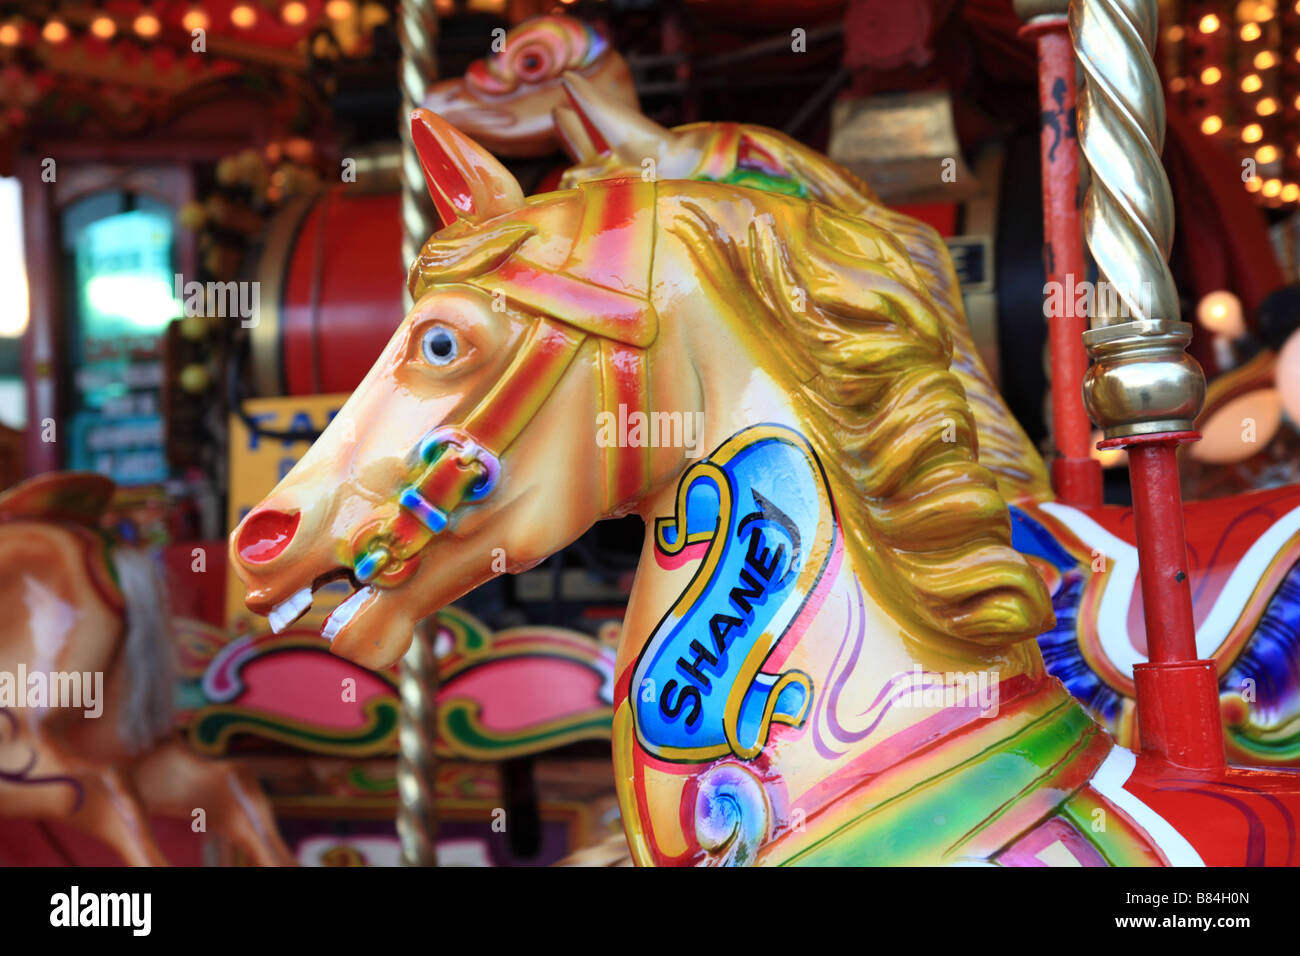 'Merigoround' horses head, painted, colourful at a fairground. Stock Photo